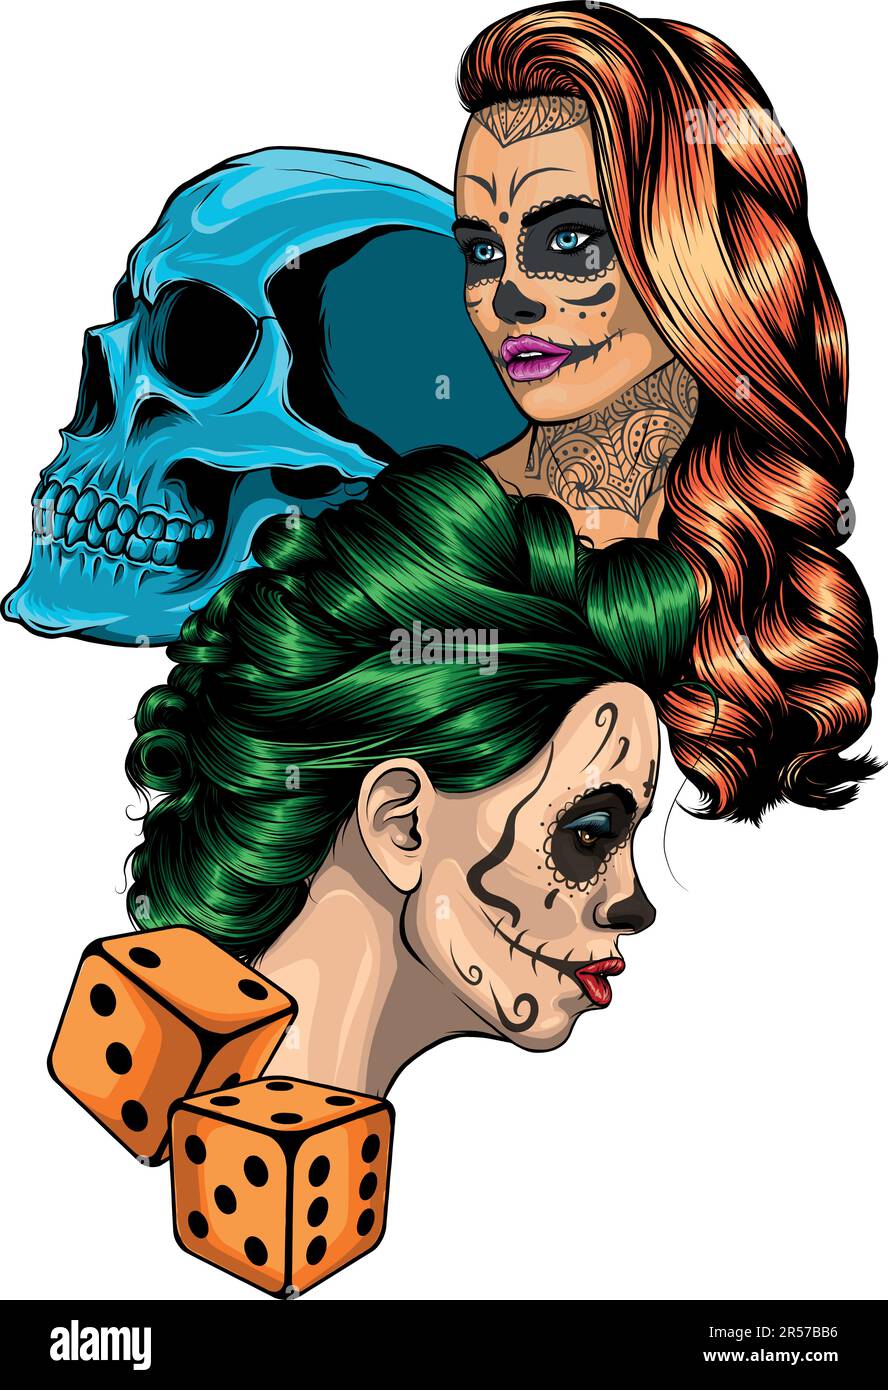 Sugar skull portrait tattoo by superrgeek on DeviantArt